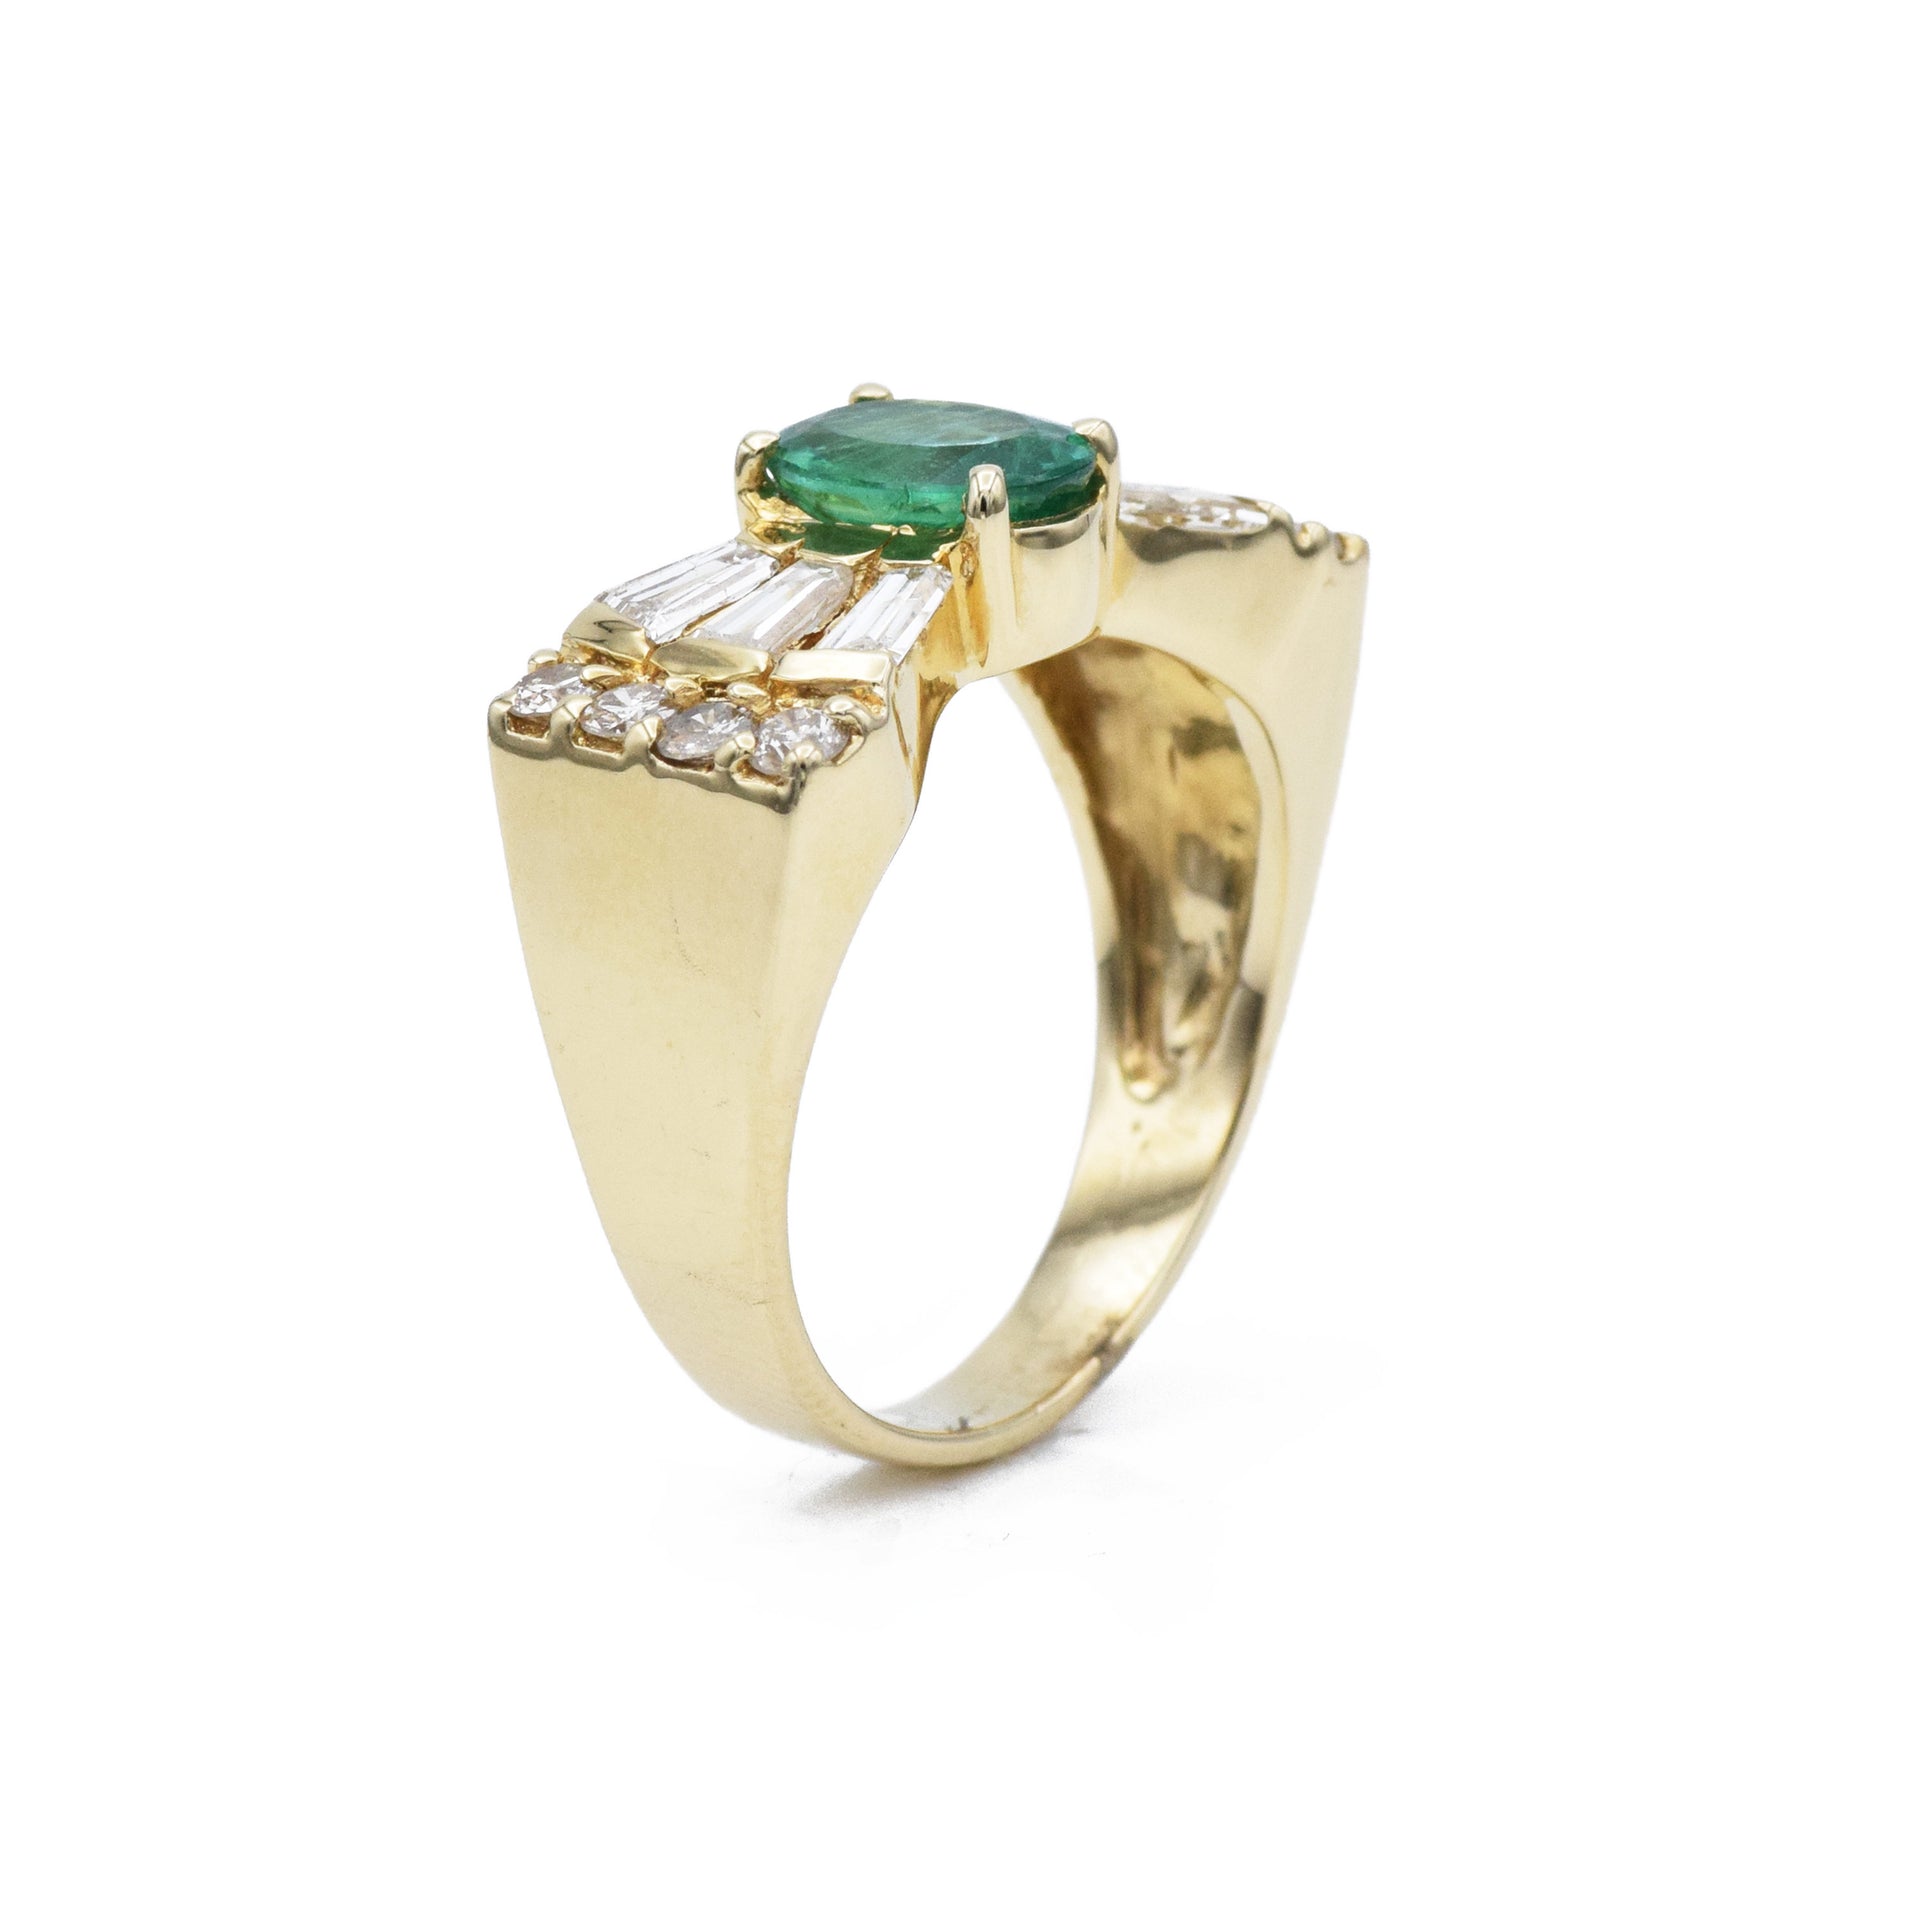 Vintage 14kt Gold, Emerald & Diamond "Bowtie" Ring